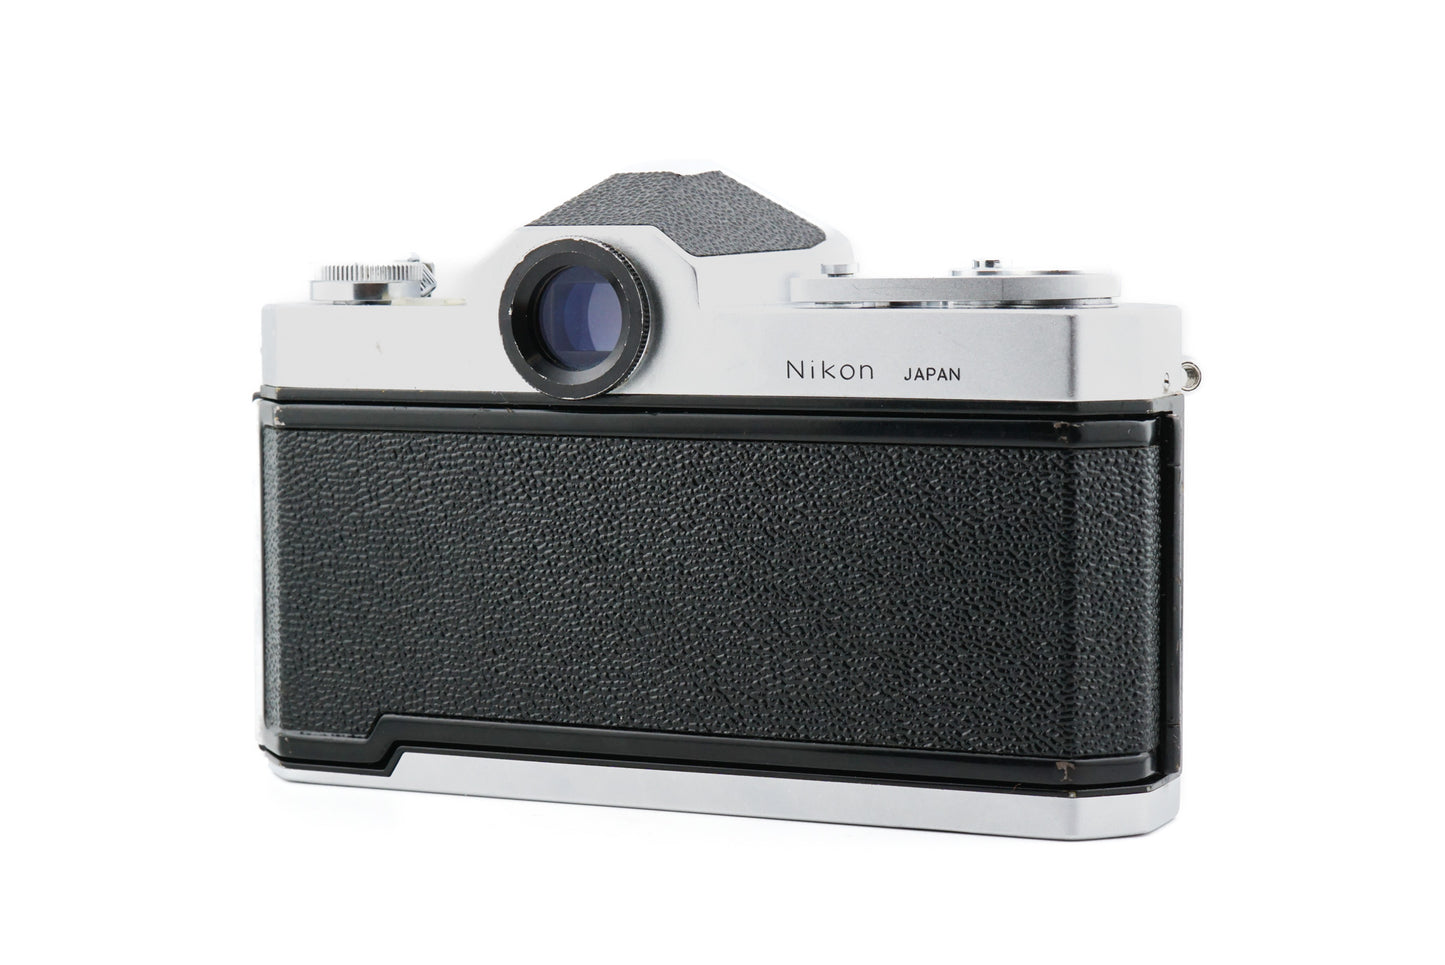 Nikon Nikkormat FT + 43-86mm f3.5 Zoom-Nikkor AI